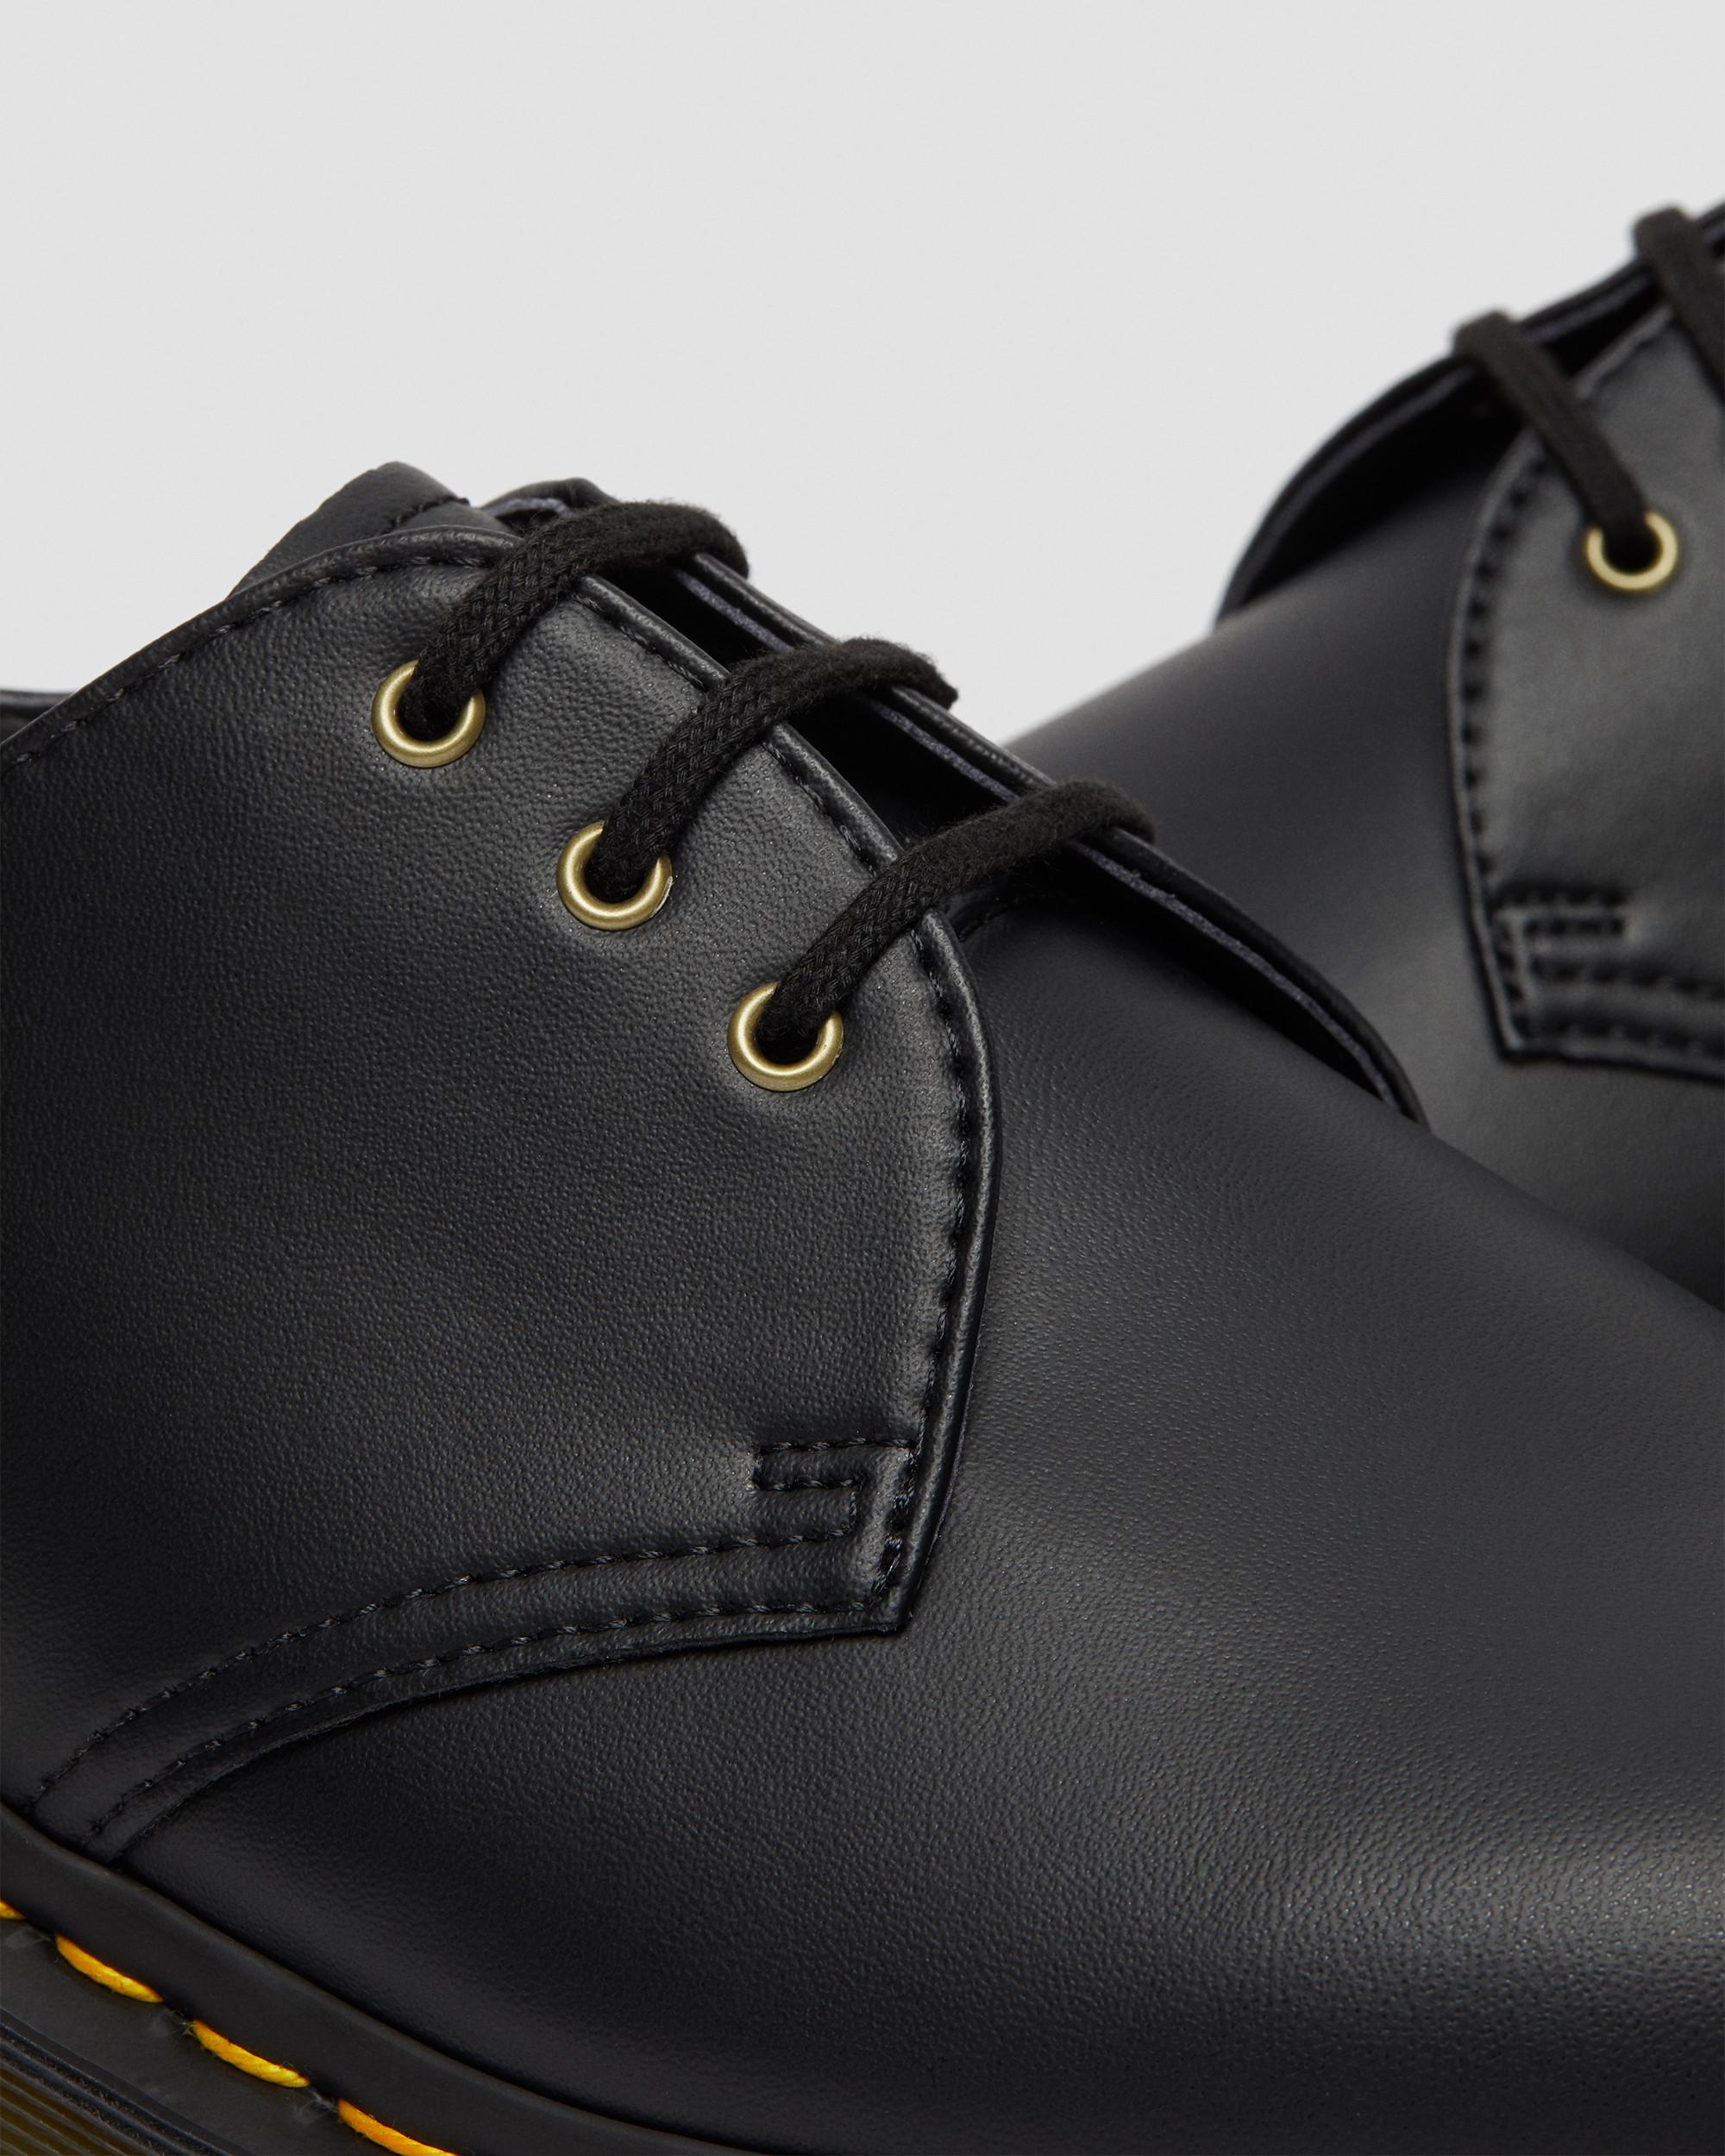 1461 Felix Vegan Oxford Shoes in Black